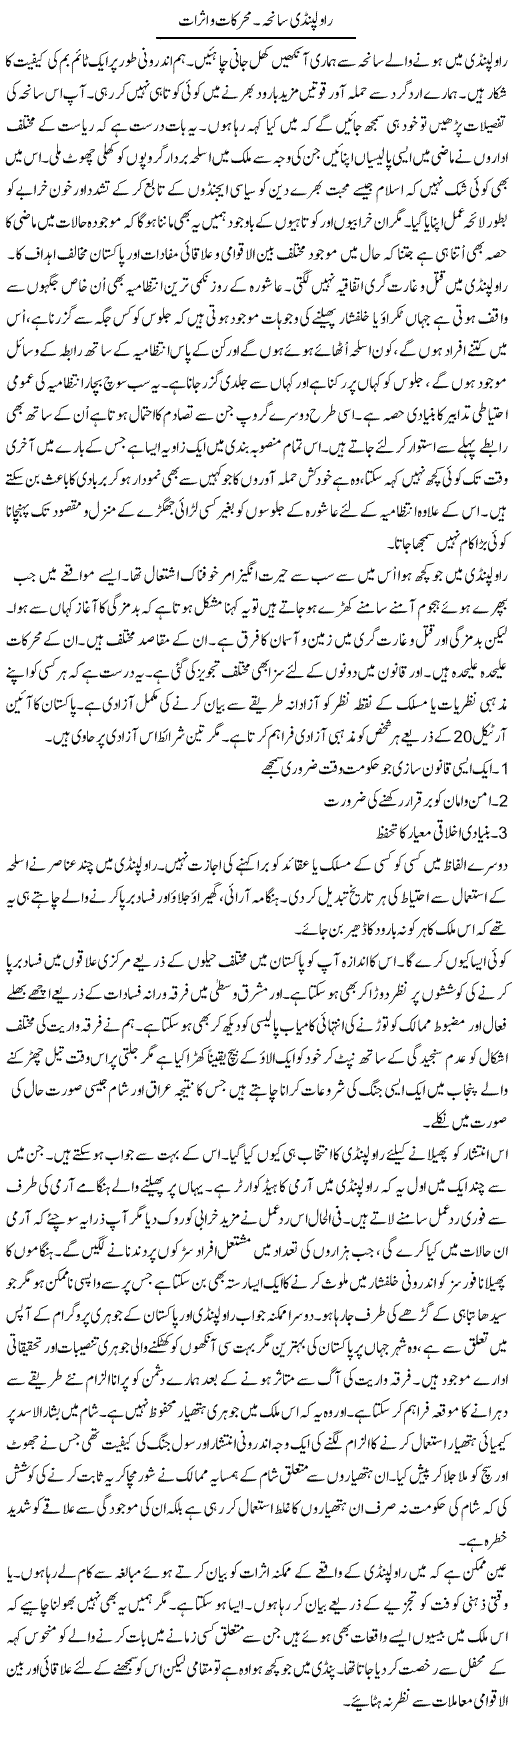 Rawalpindi Saniha Muharrakat O Asraat | Talat Hussain | Daily Urdu Columns